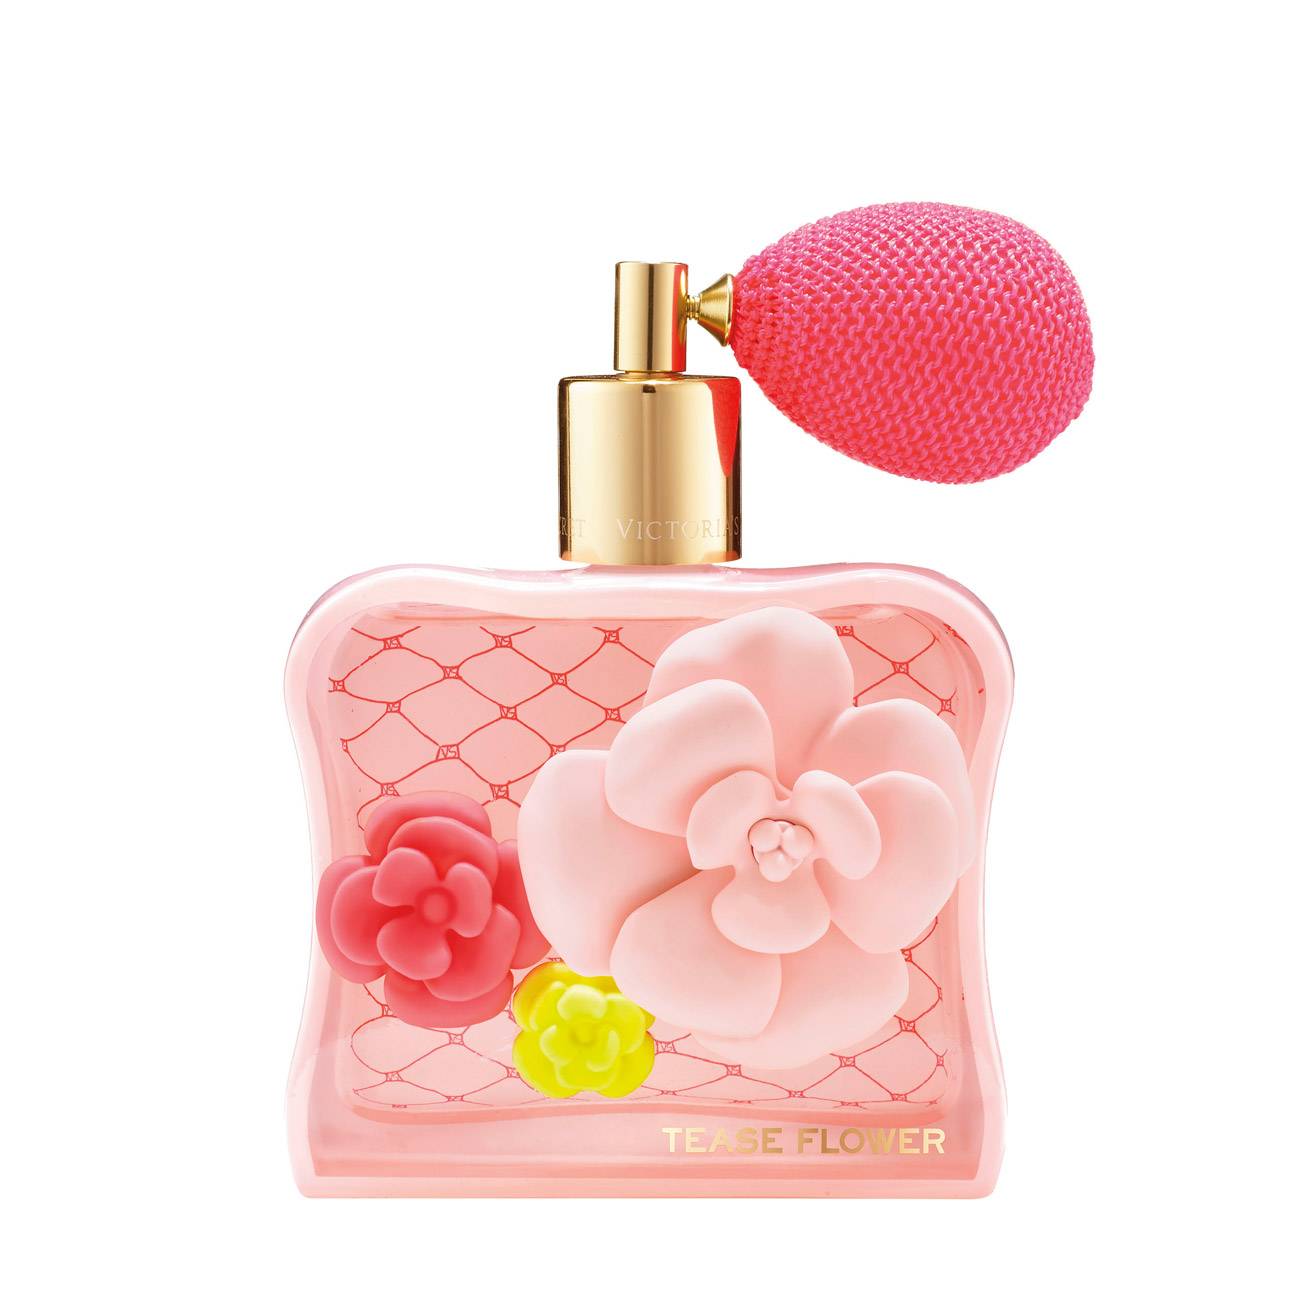 Apa de Parfum Victoria’s Secret TEASE FLOWER 100ml cu comanda online